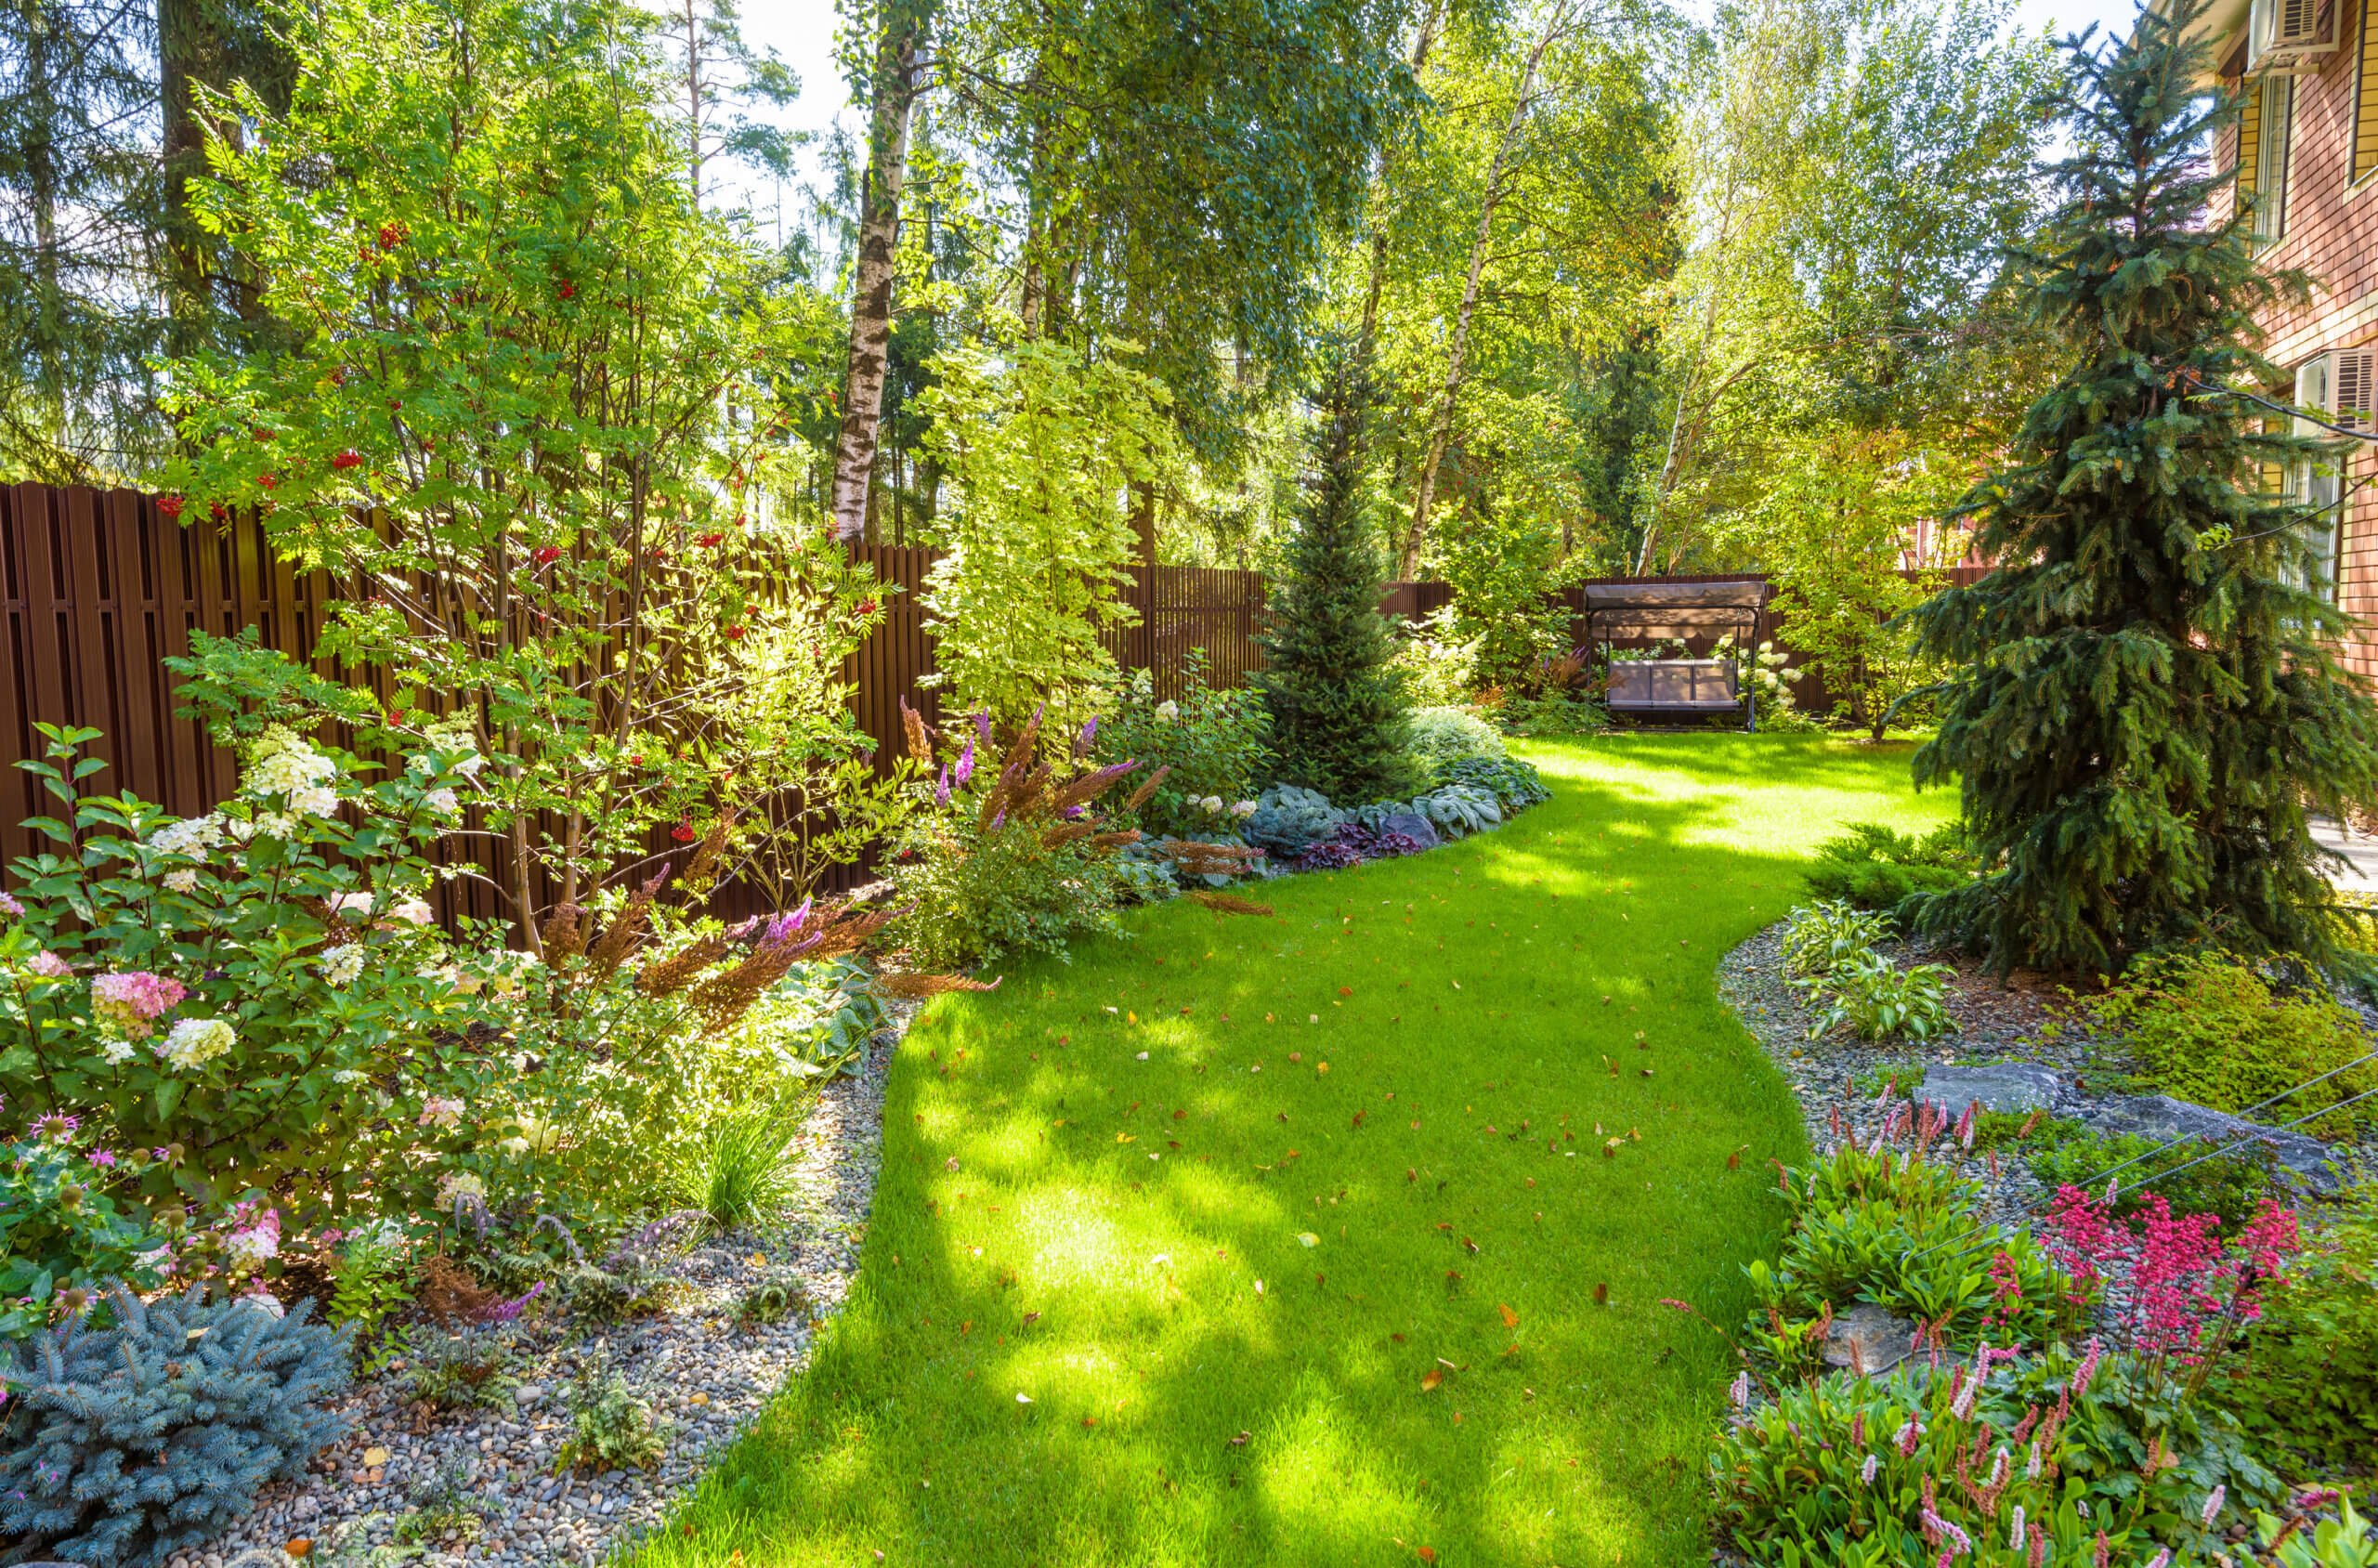 Landscaping in green home garden